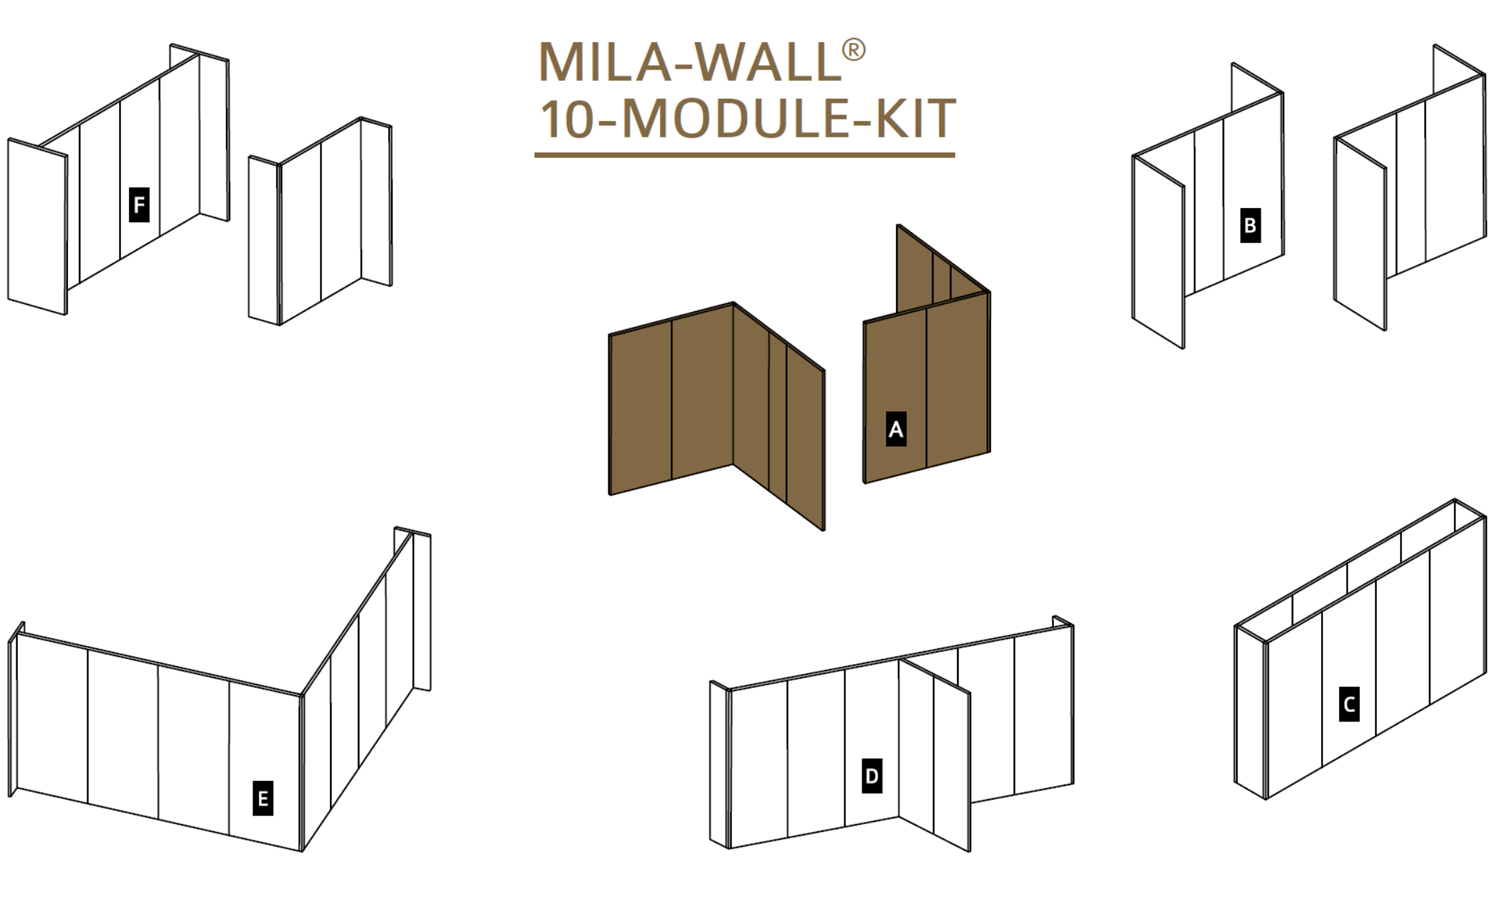 Sketch MBA Mila-wall Kit 10